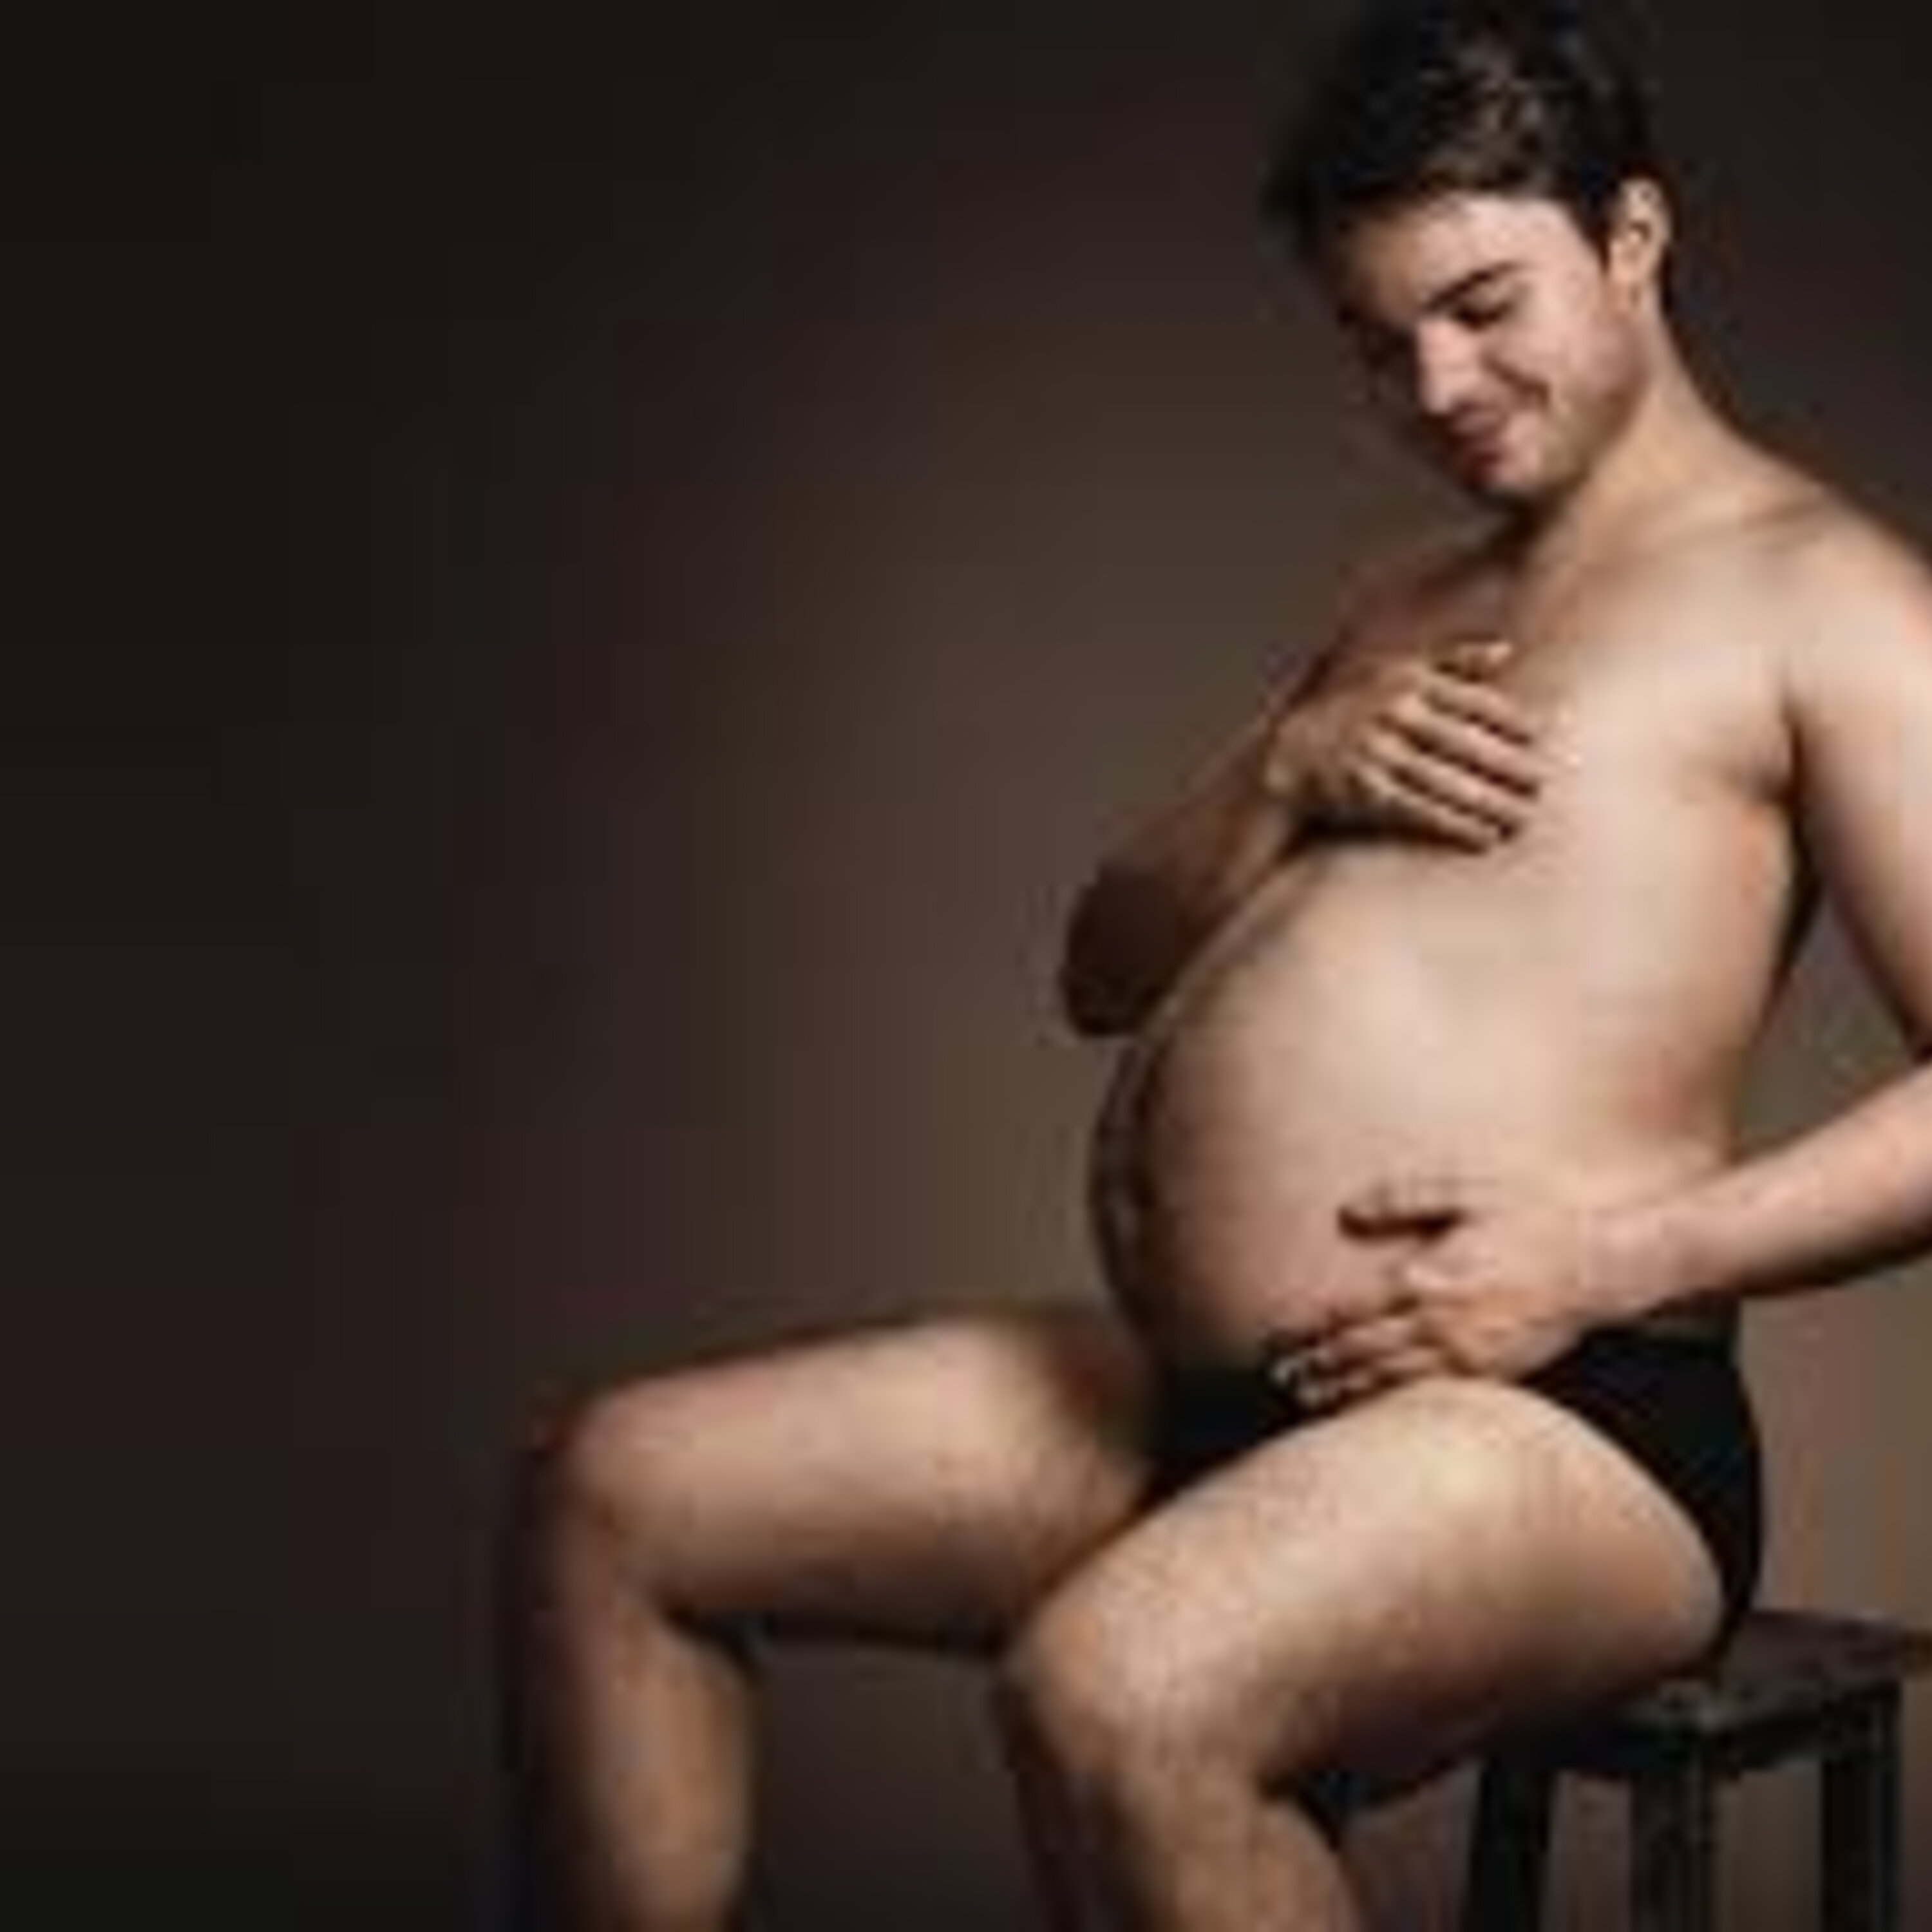 J&E CATCH UP - Undercover In Coles, Pregnant Men & Block Contestant...